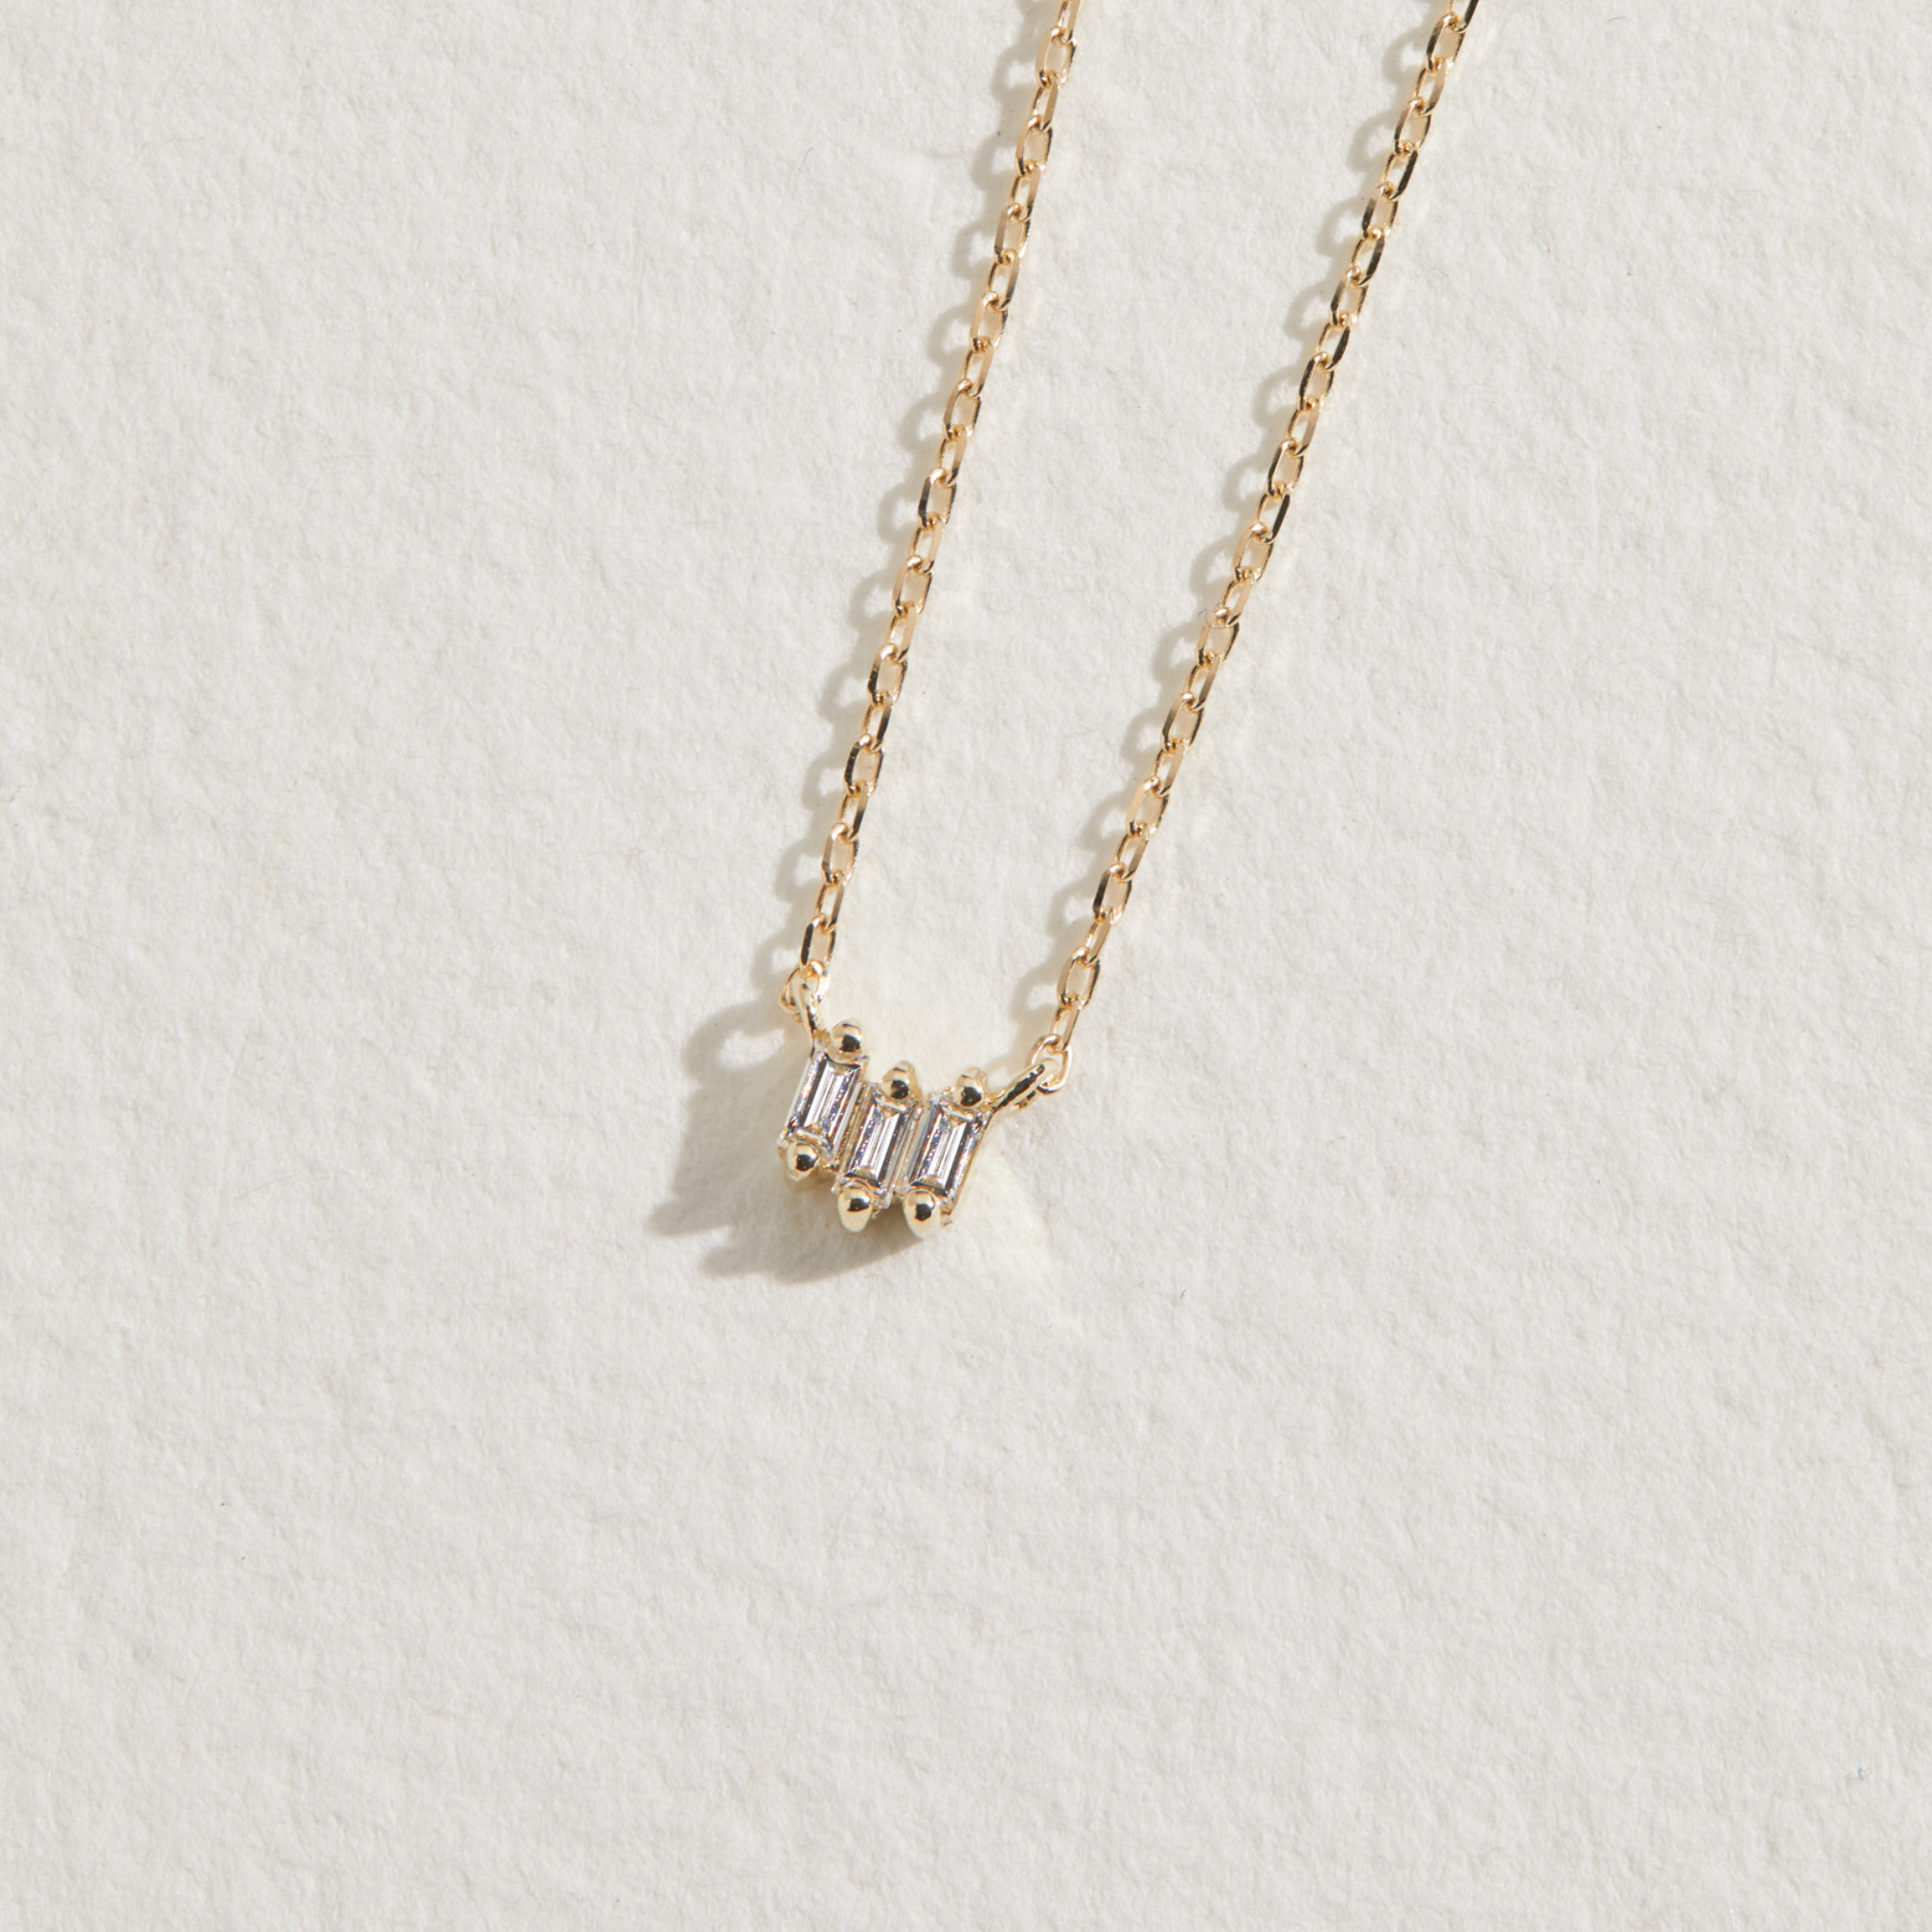 Silver triple baguette diamond necklace close up on a paper surface